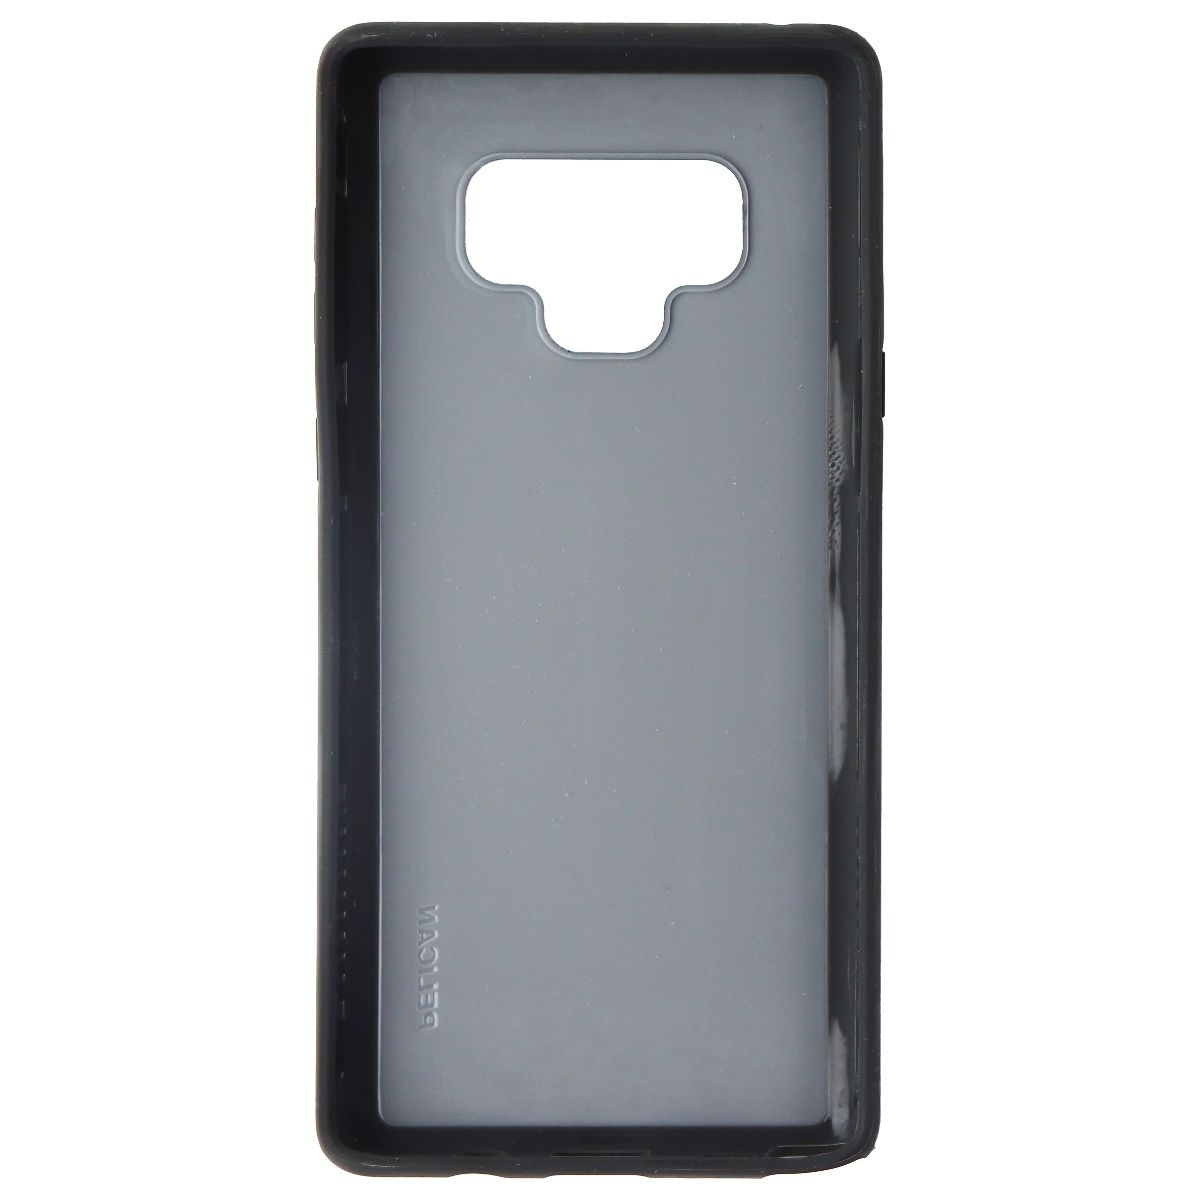 Pelican Adventurer - Samsung Galaxy Note9 Case (Metallic Silver)